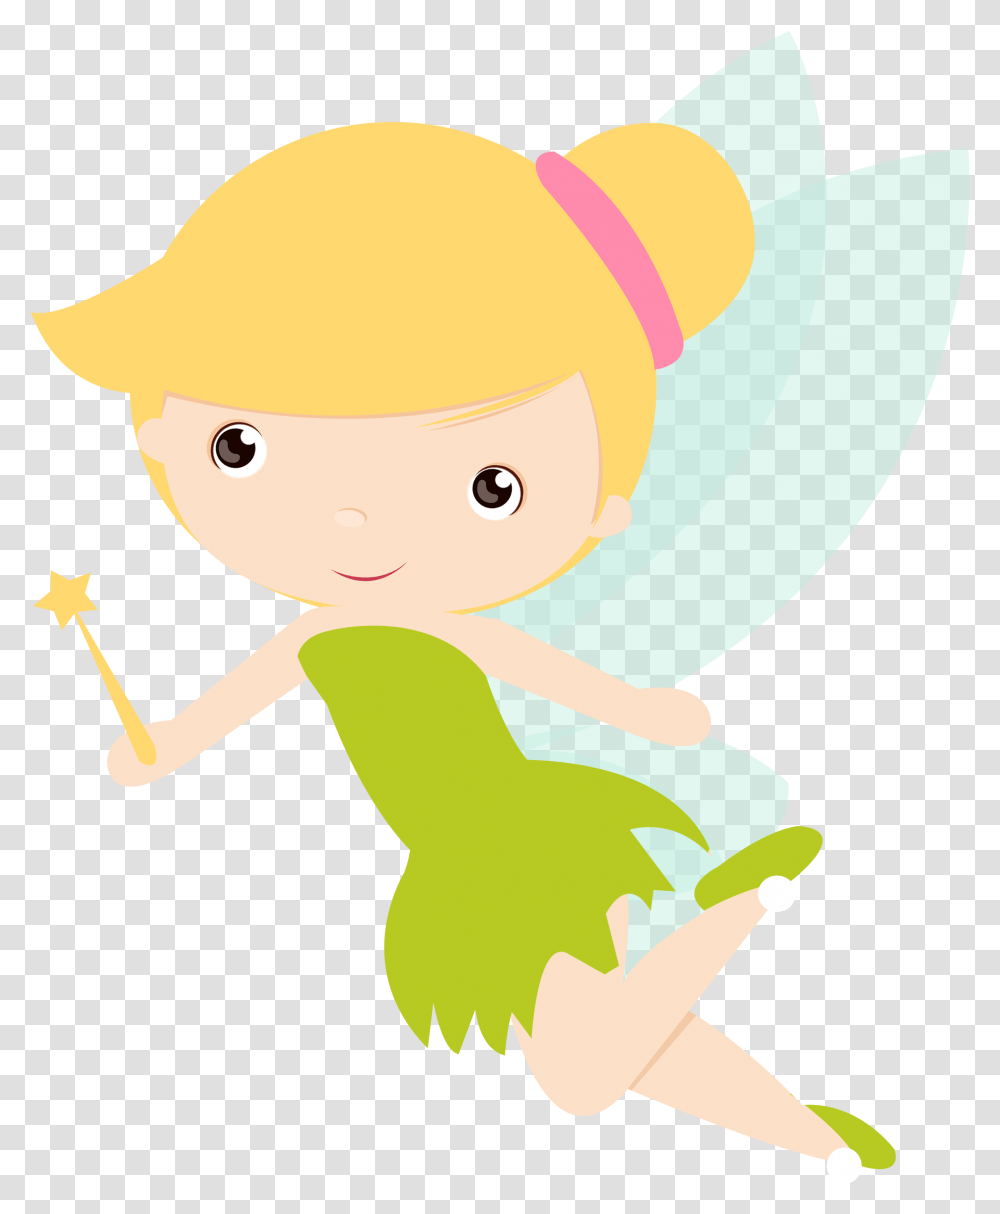 Peter Pan Party Princess Castle Clipart Images Tinkerbell Cartoon, Apparel, Hat, Bonnet Transparent Png